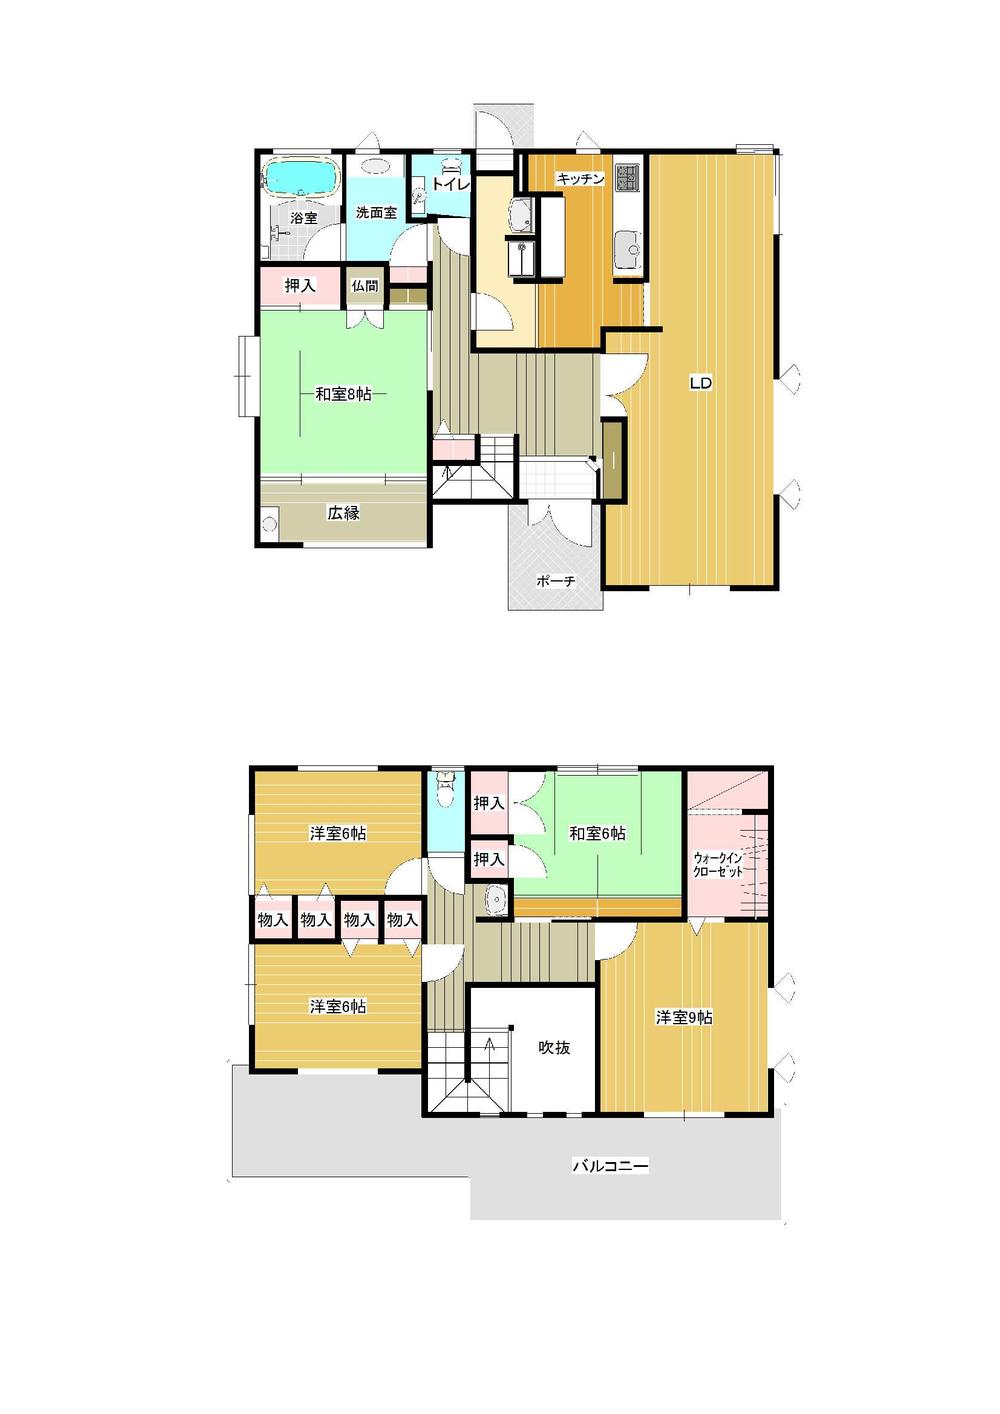 Floor plan. 21 million yen, 5LDK + S (storeroom), Land area 208.74 sq m , Building area 162.96 sq m